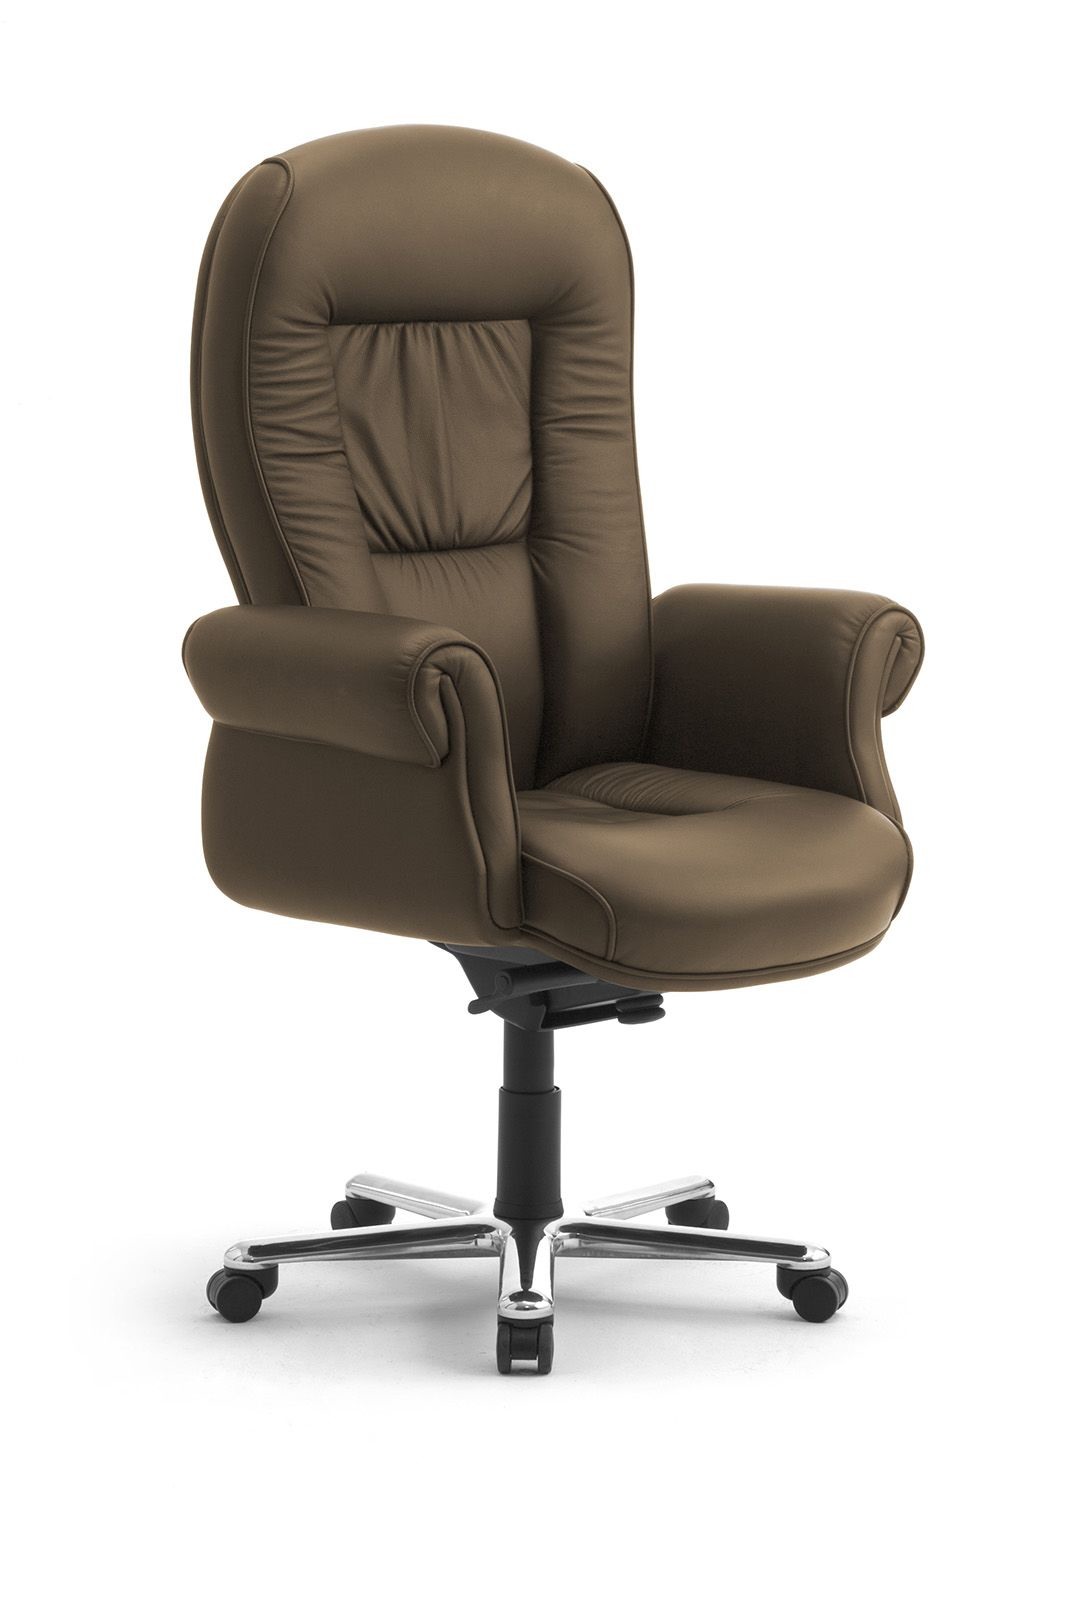 Moderne fauteuils de bureau avec design elegant - Leyform srl